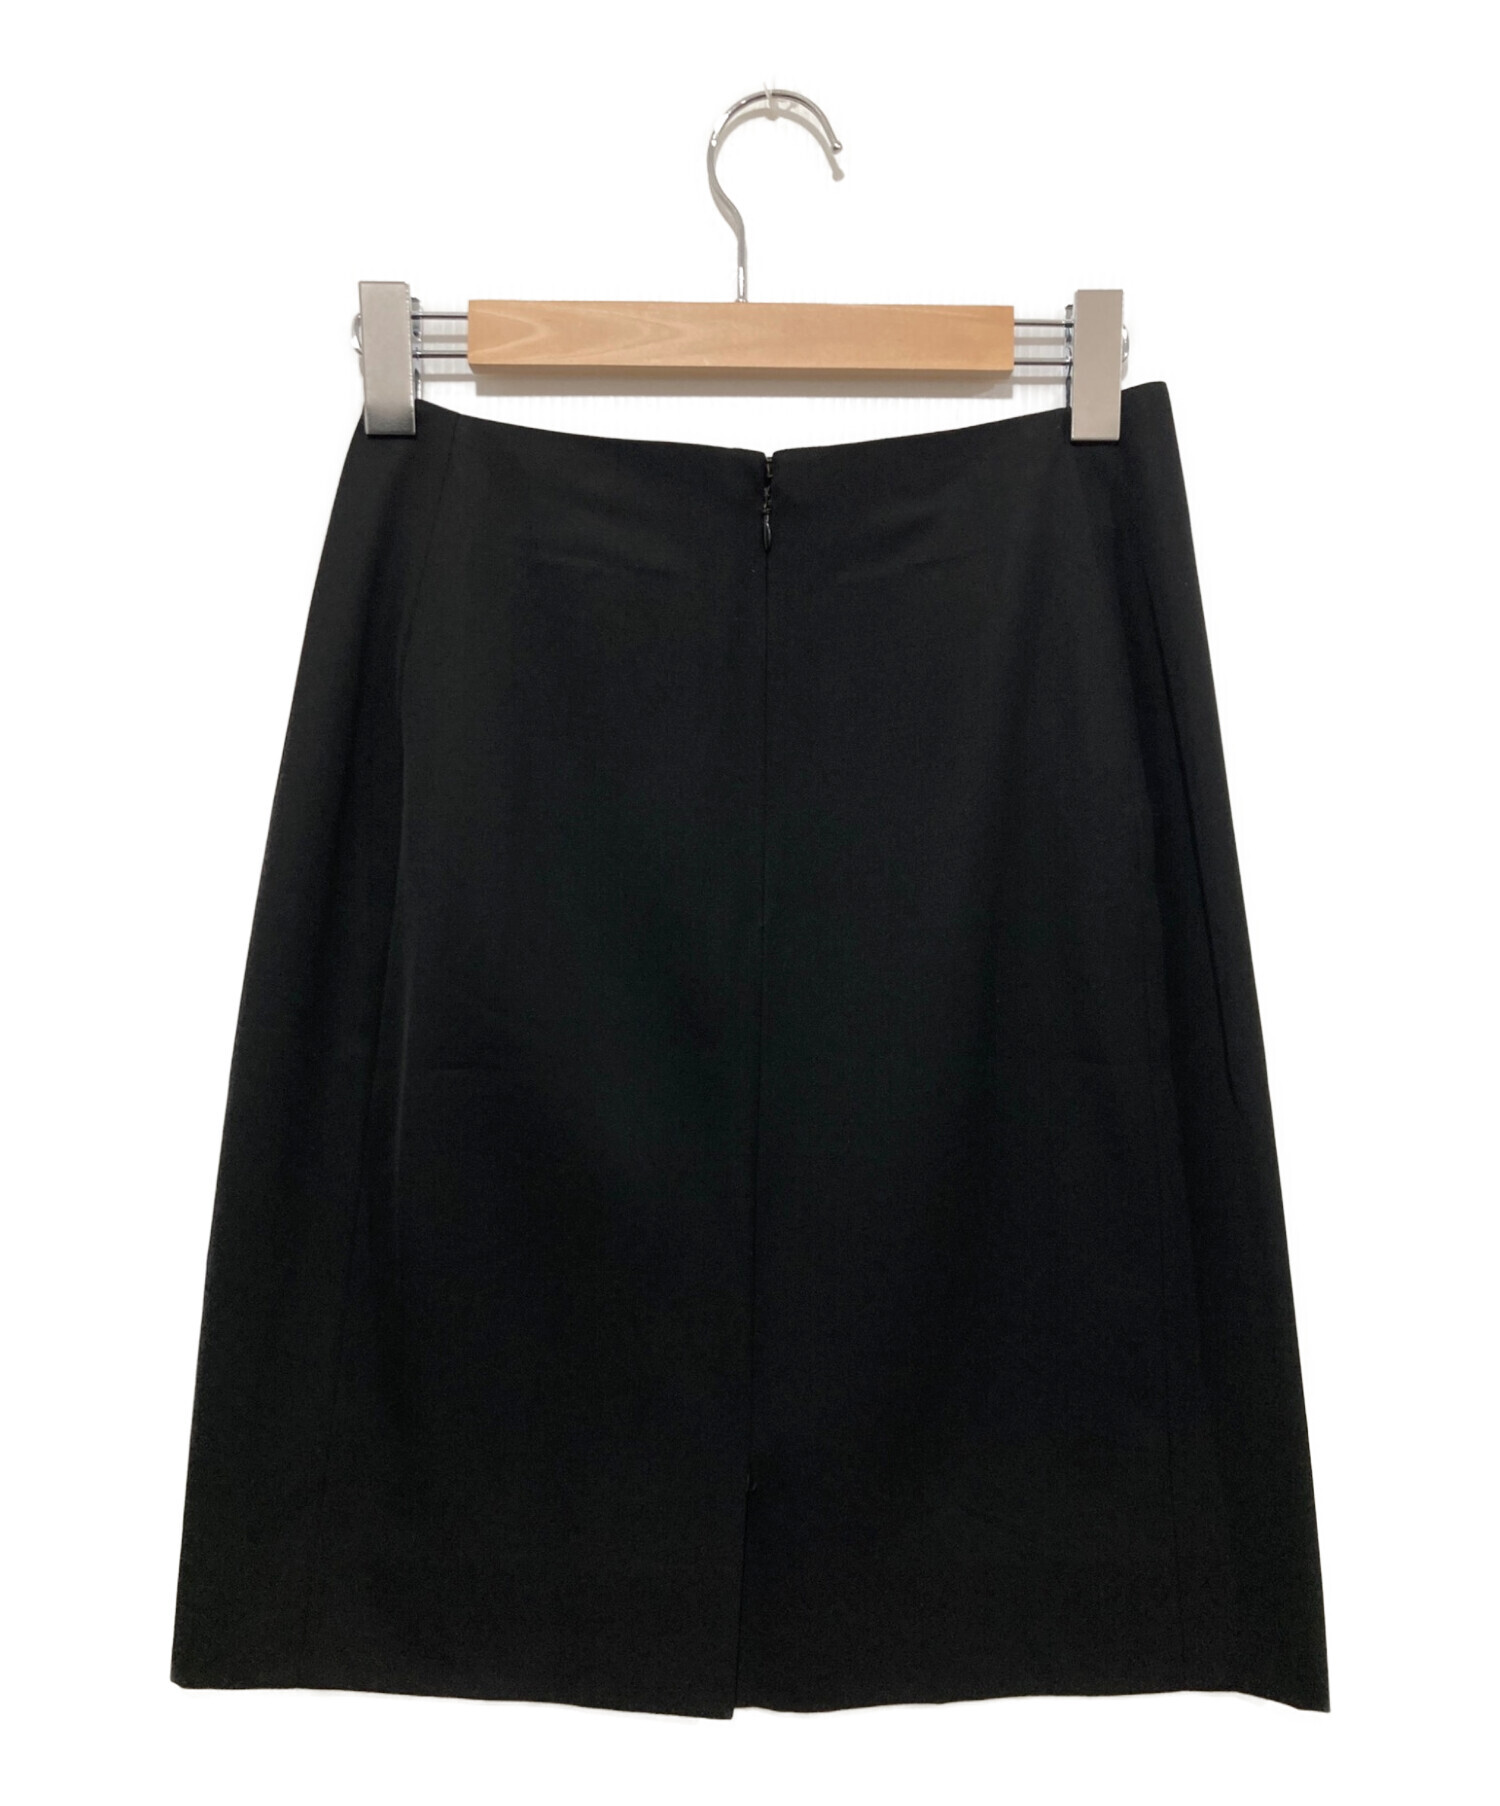 CELINE (セリーヌ) ロゴプレートメタルチェーンスカート ブラック サイズ:40